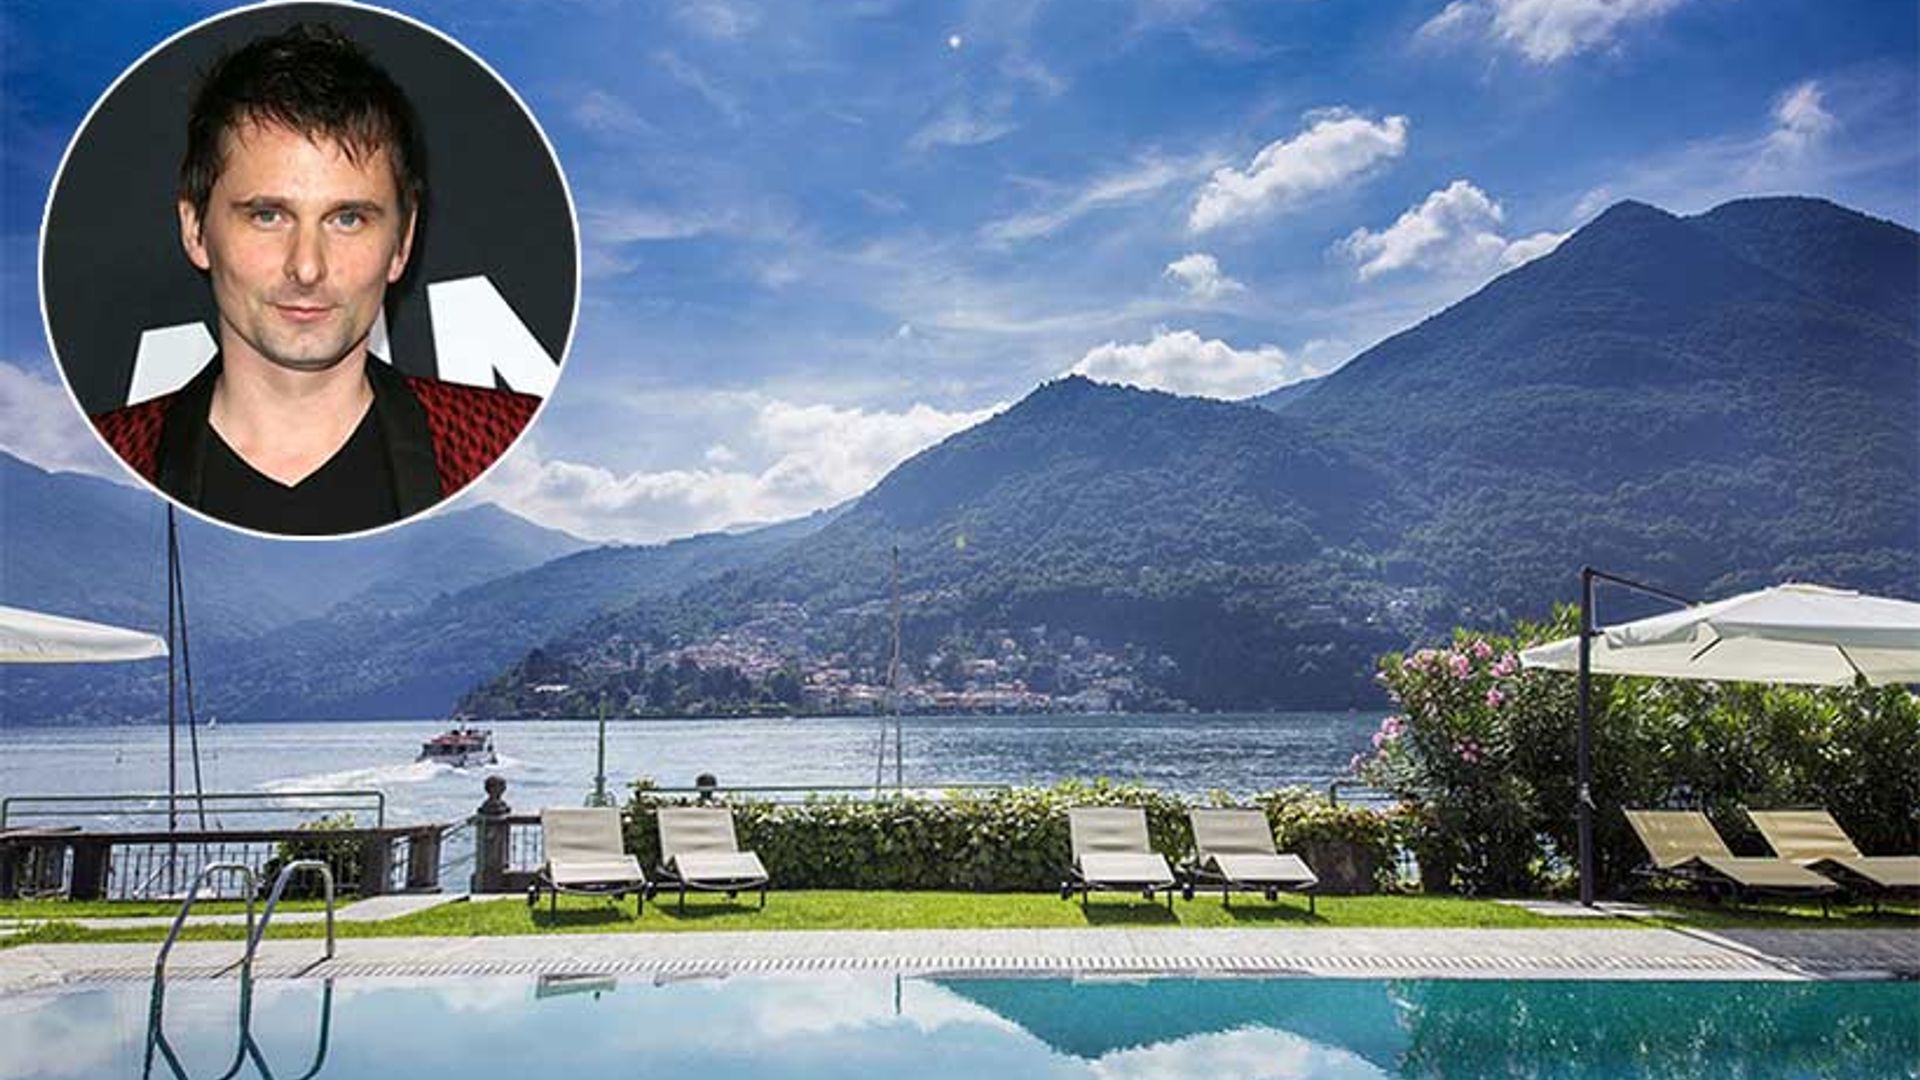 Matt Bellamy's lavish Lake Como apartment goes on sale for £1.5million – see inside